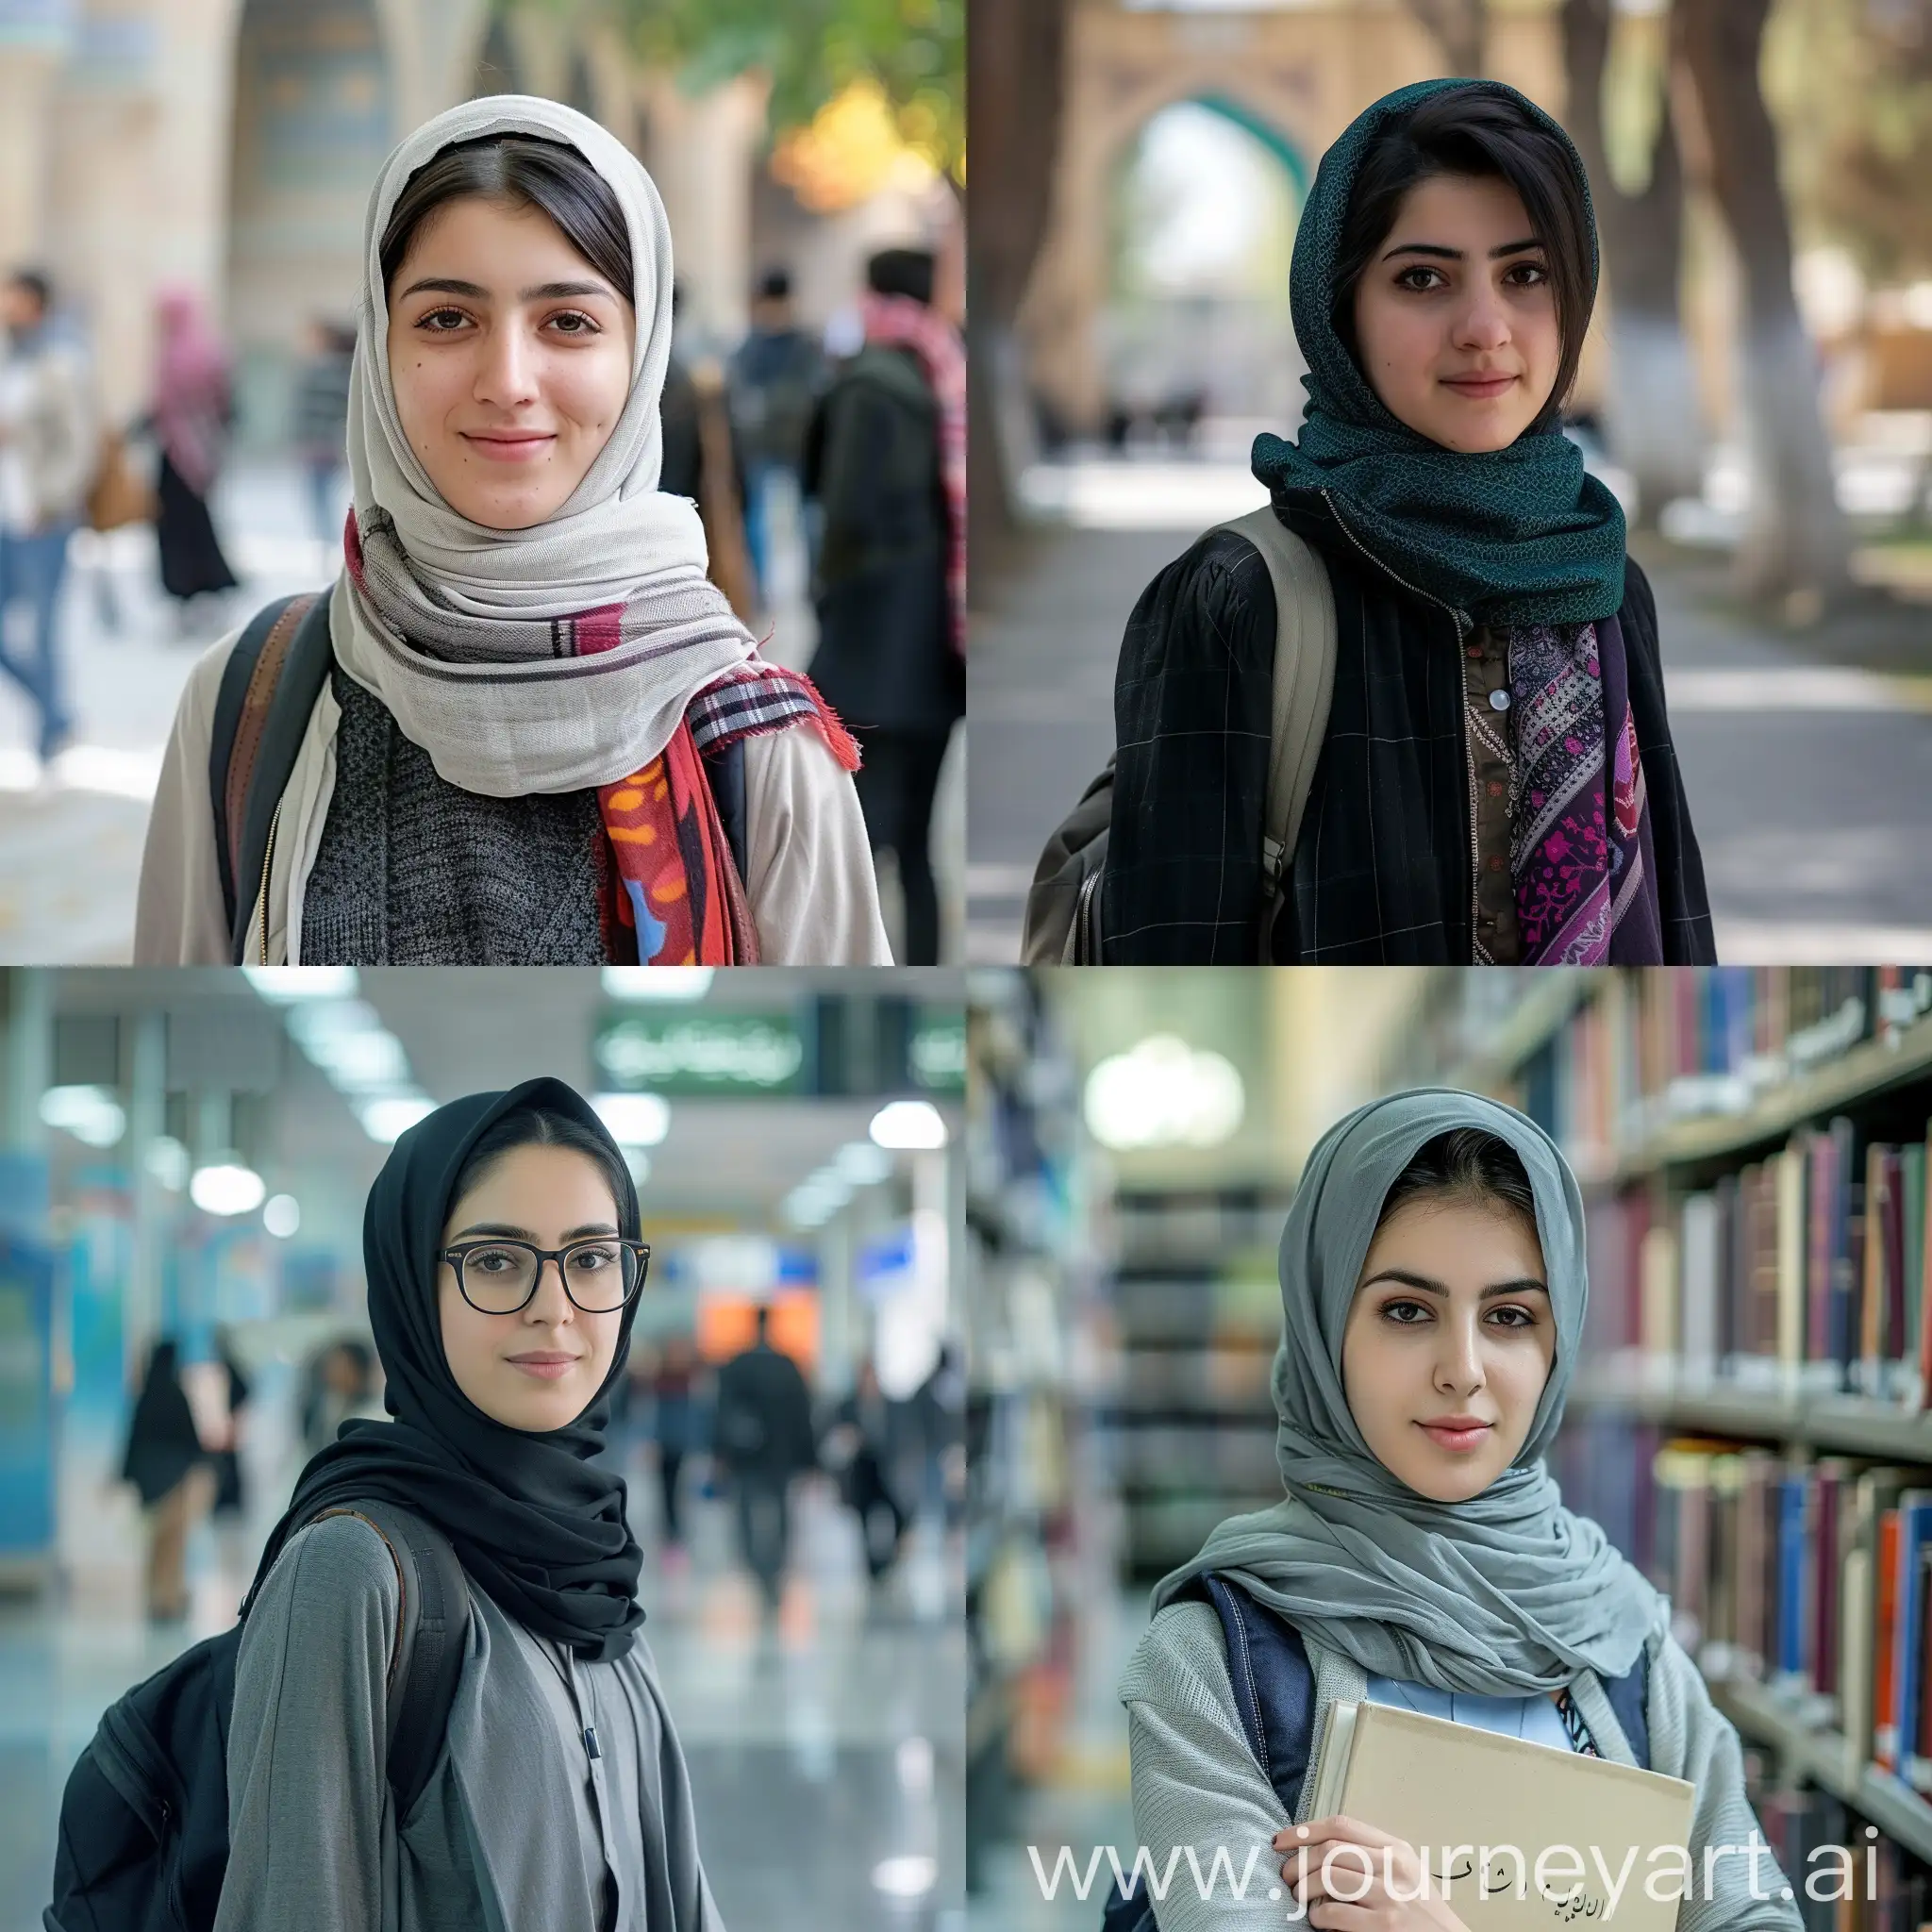 Iranian female student